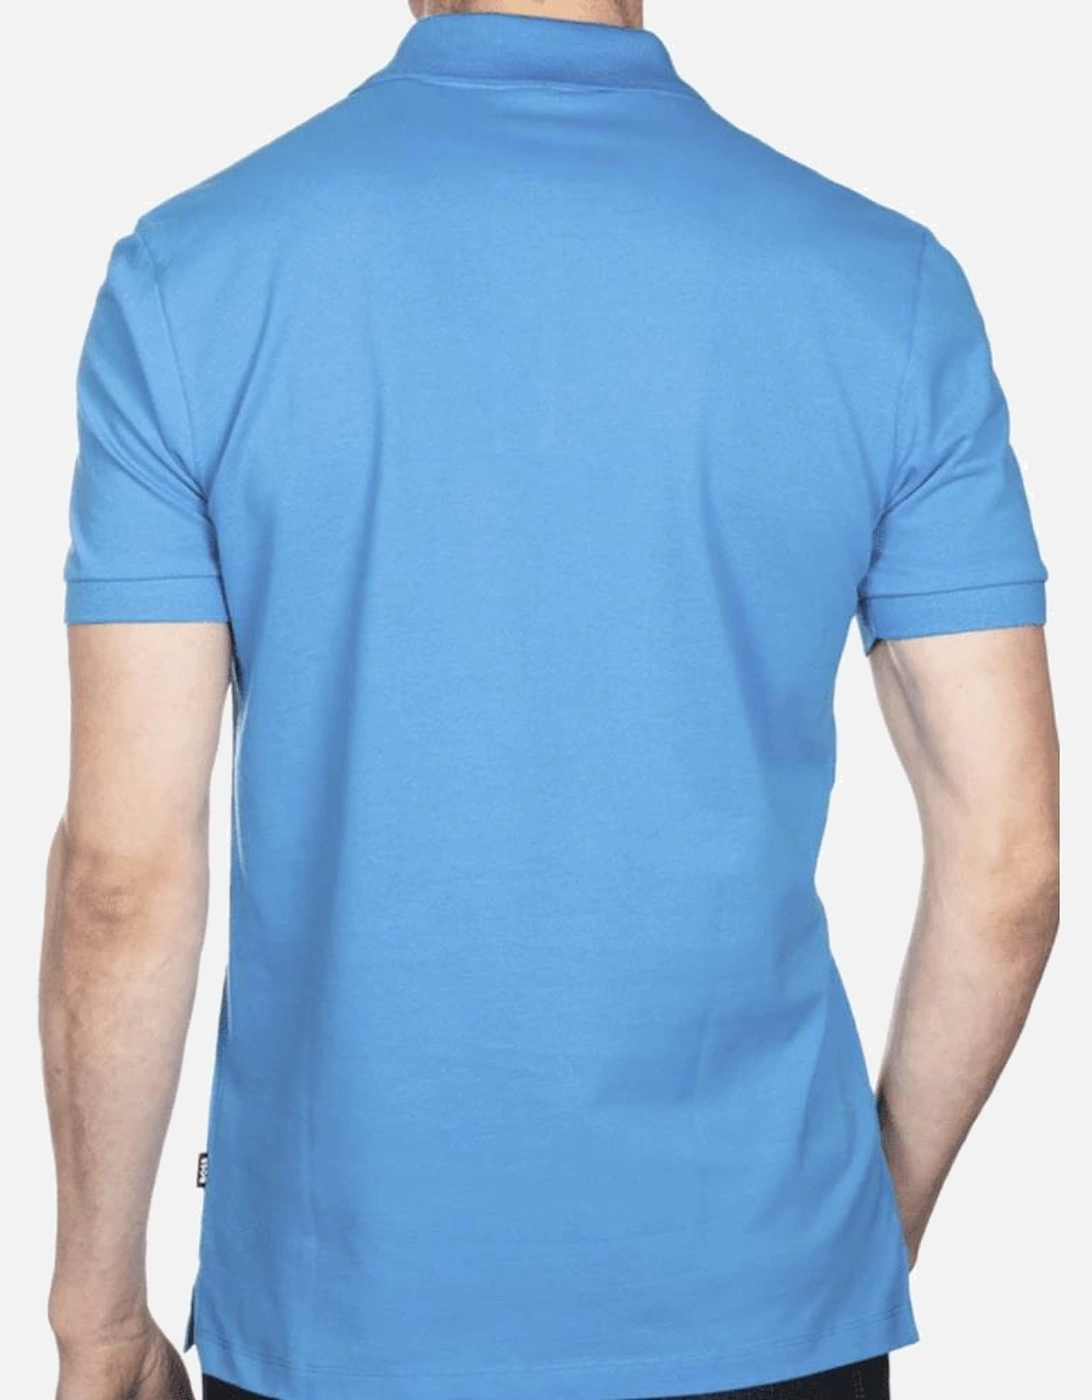 Pallas Cotton Aqua Blue Polo Shirt